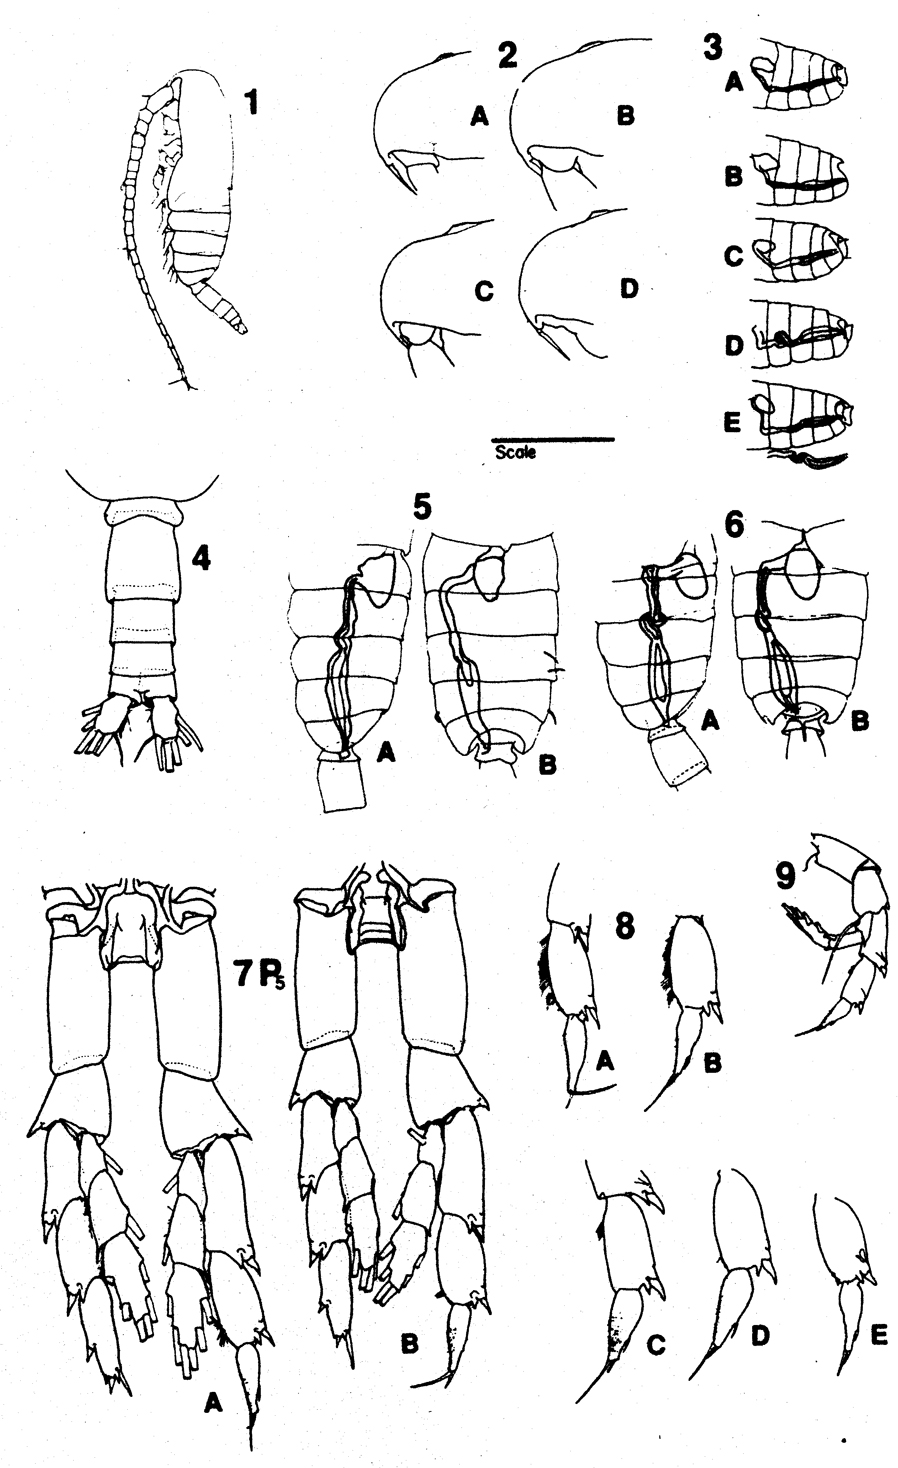 Species Neocalanus plumchrus - Plate 11 of morphological figures